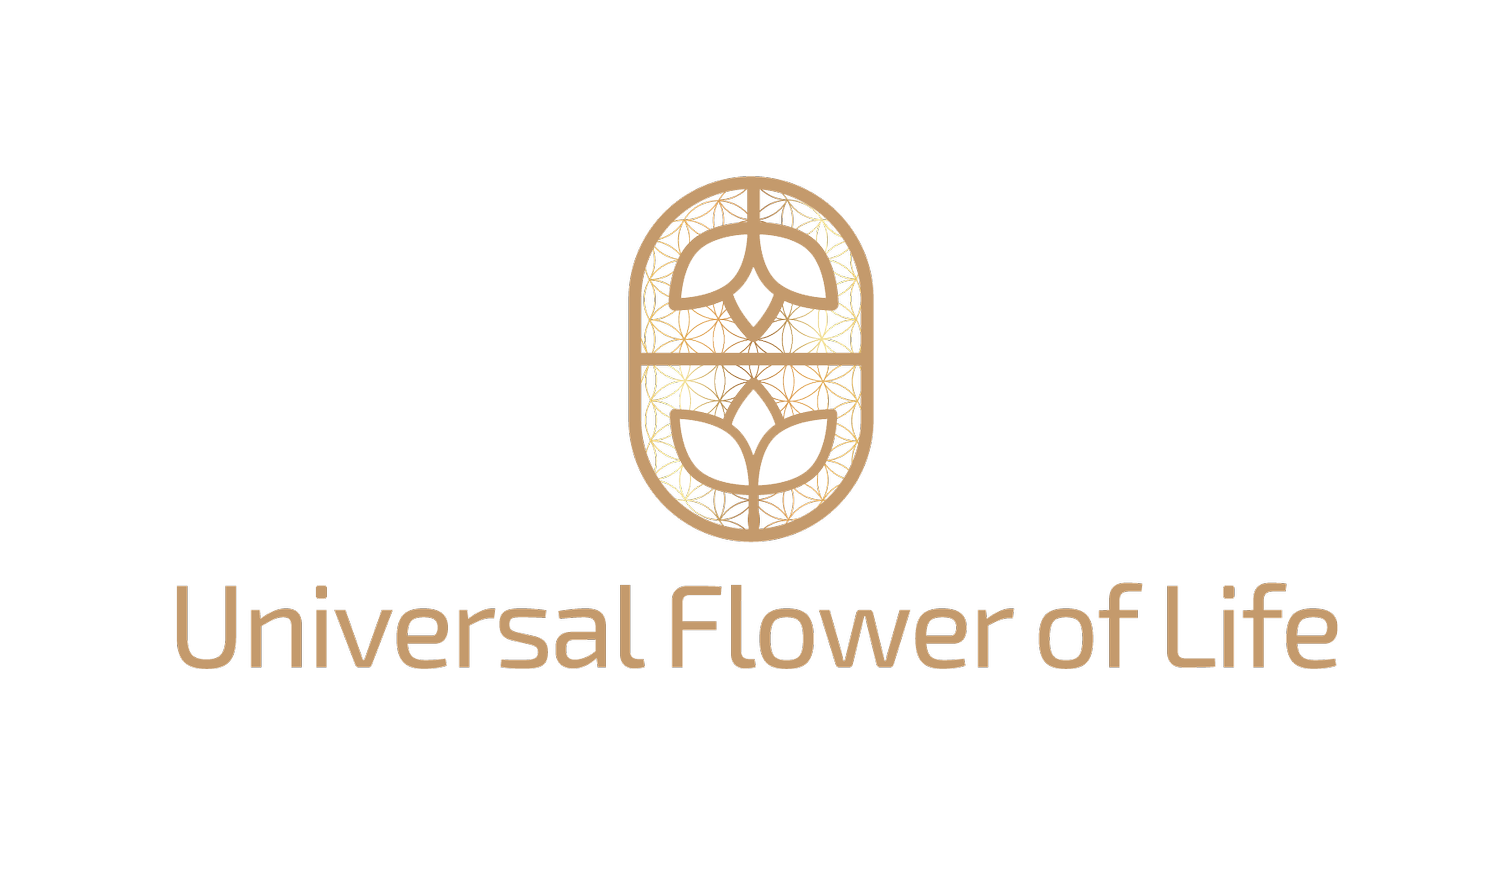 Universal Flower of Life